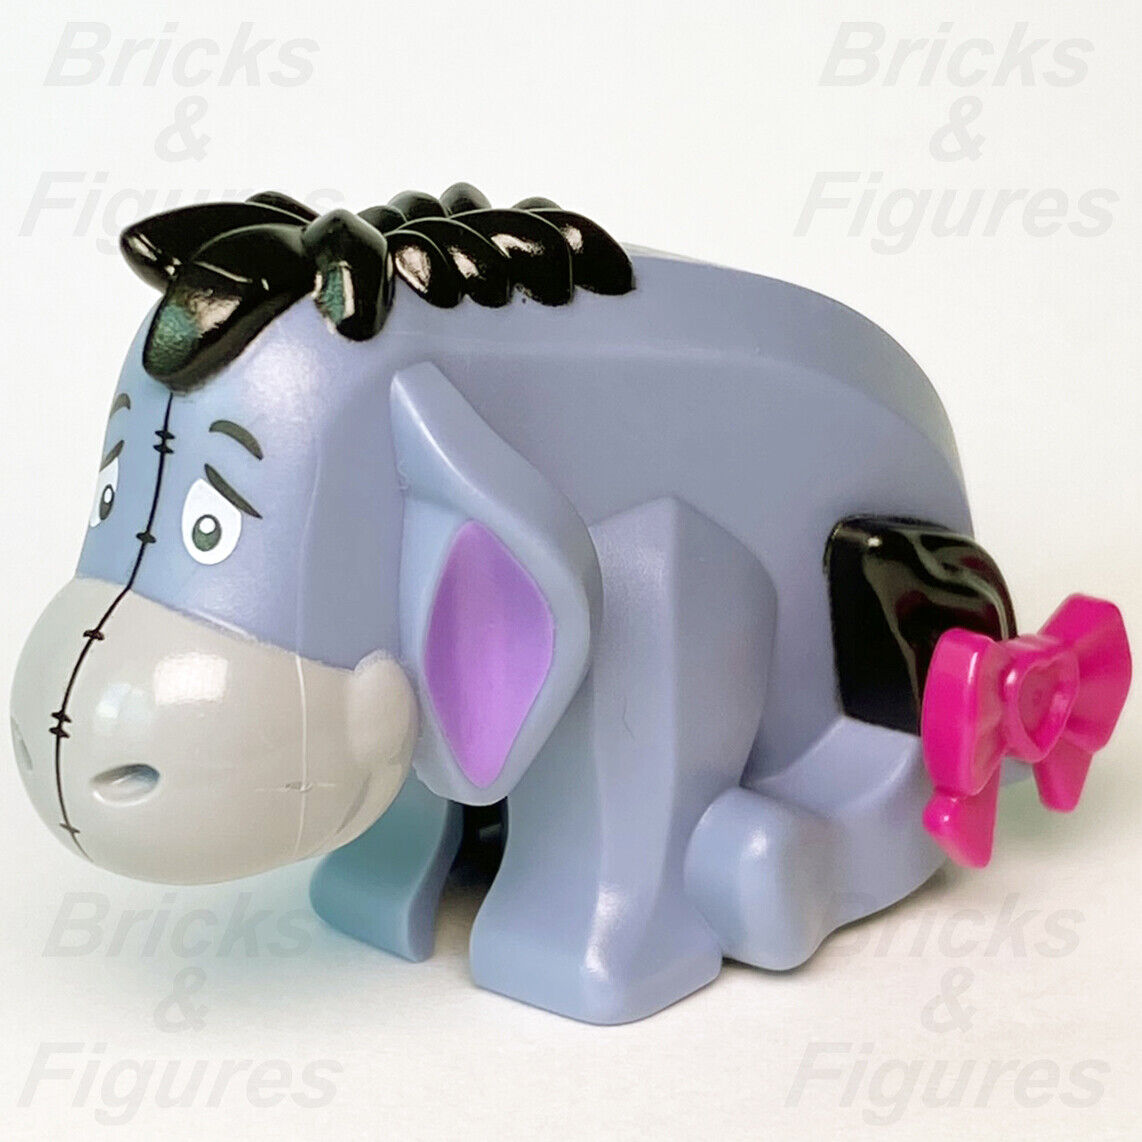 LEGO® Eeyore CUUSOO Winnie Pooh Donkey Minifigure 21326 idea090 | eBay